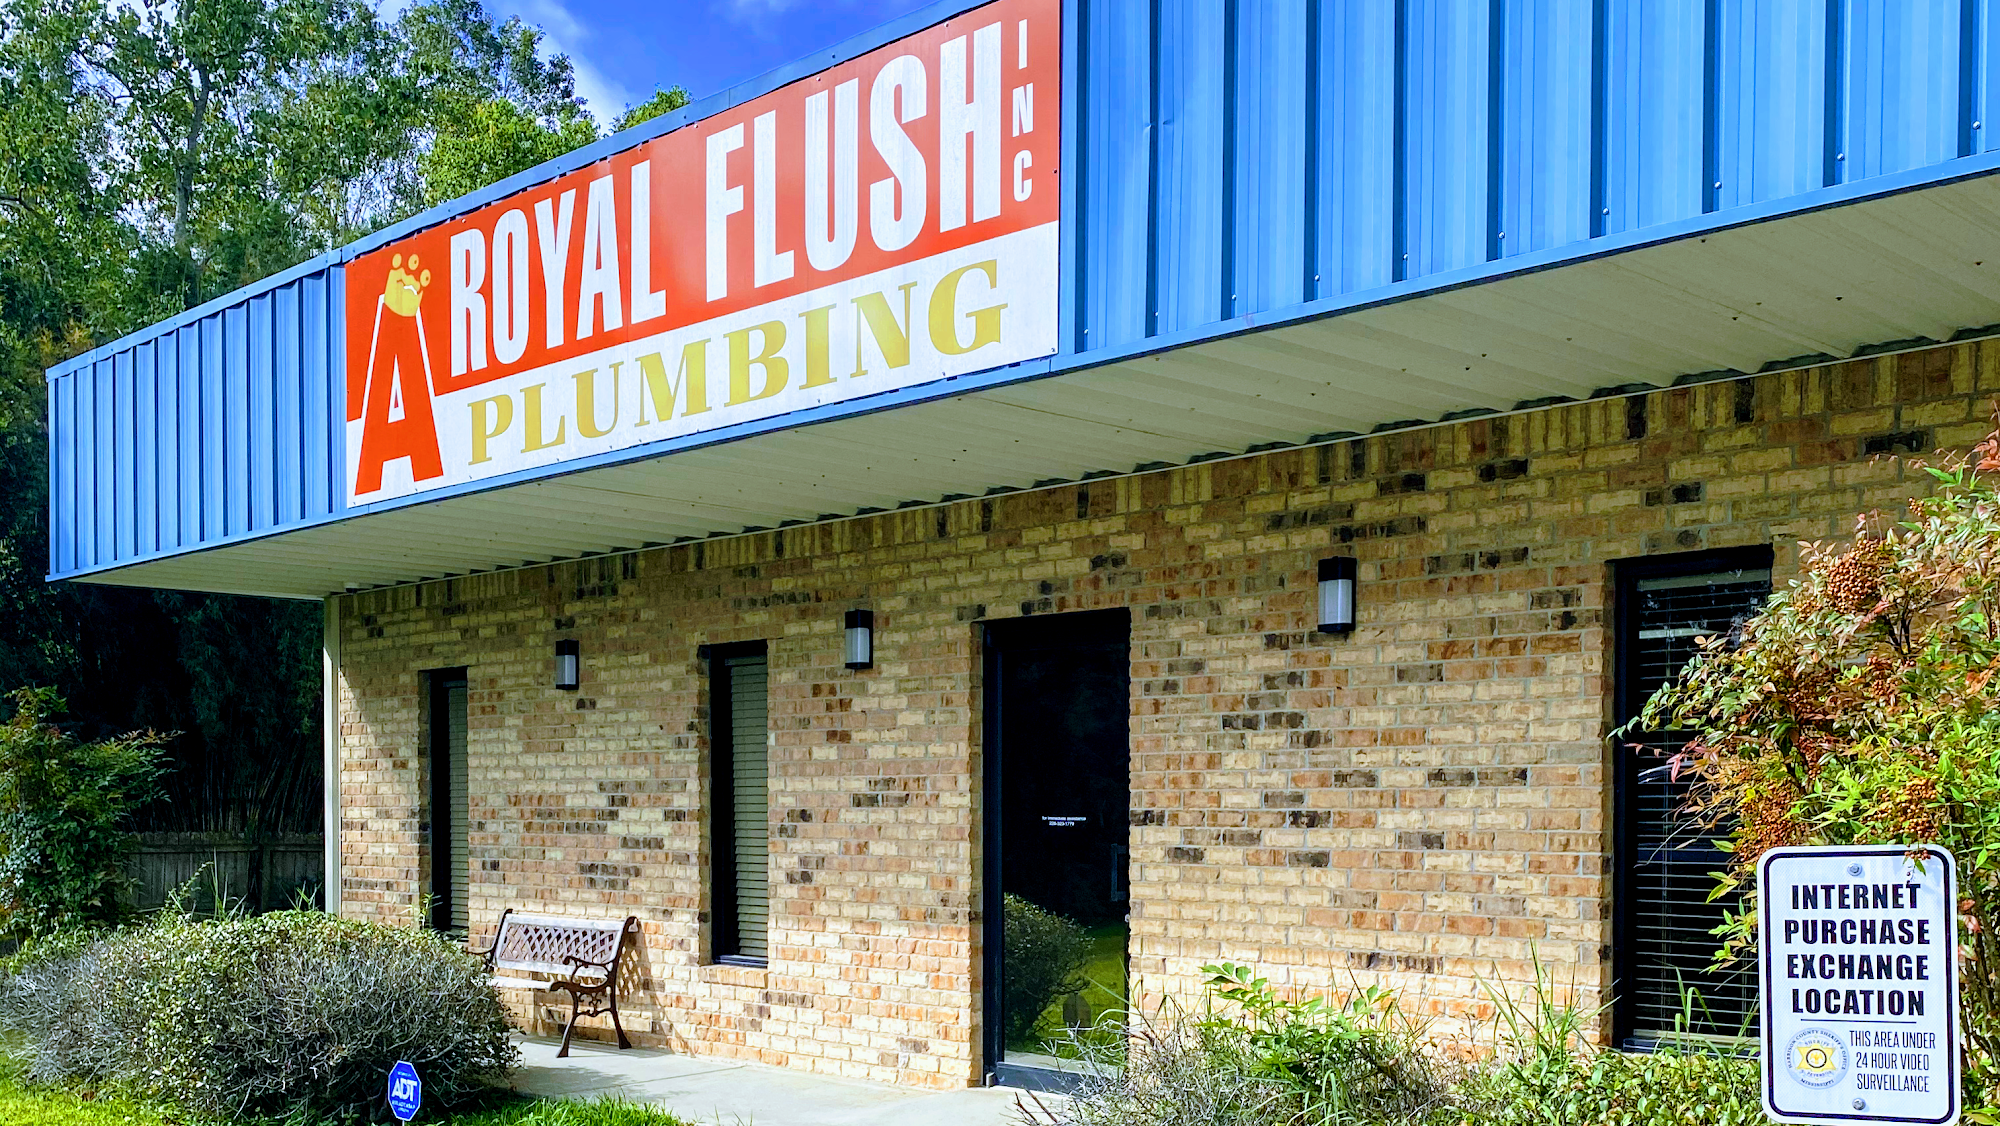 A Royal Flush, Inc. Plumbing Company